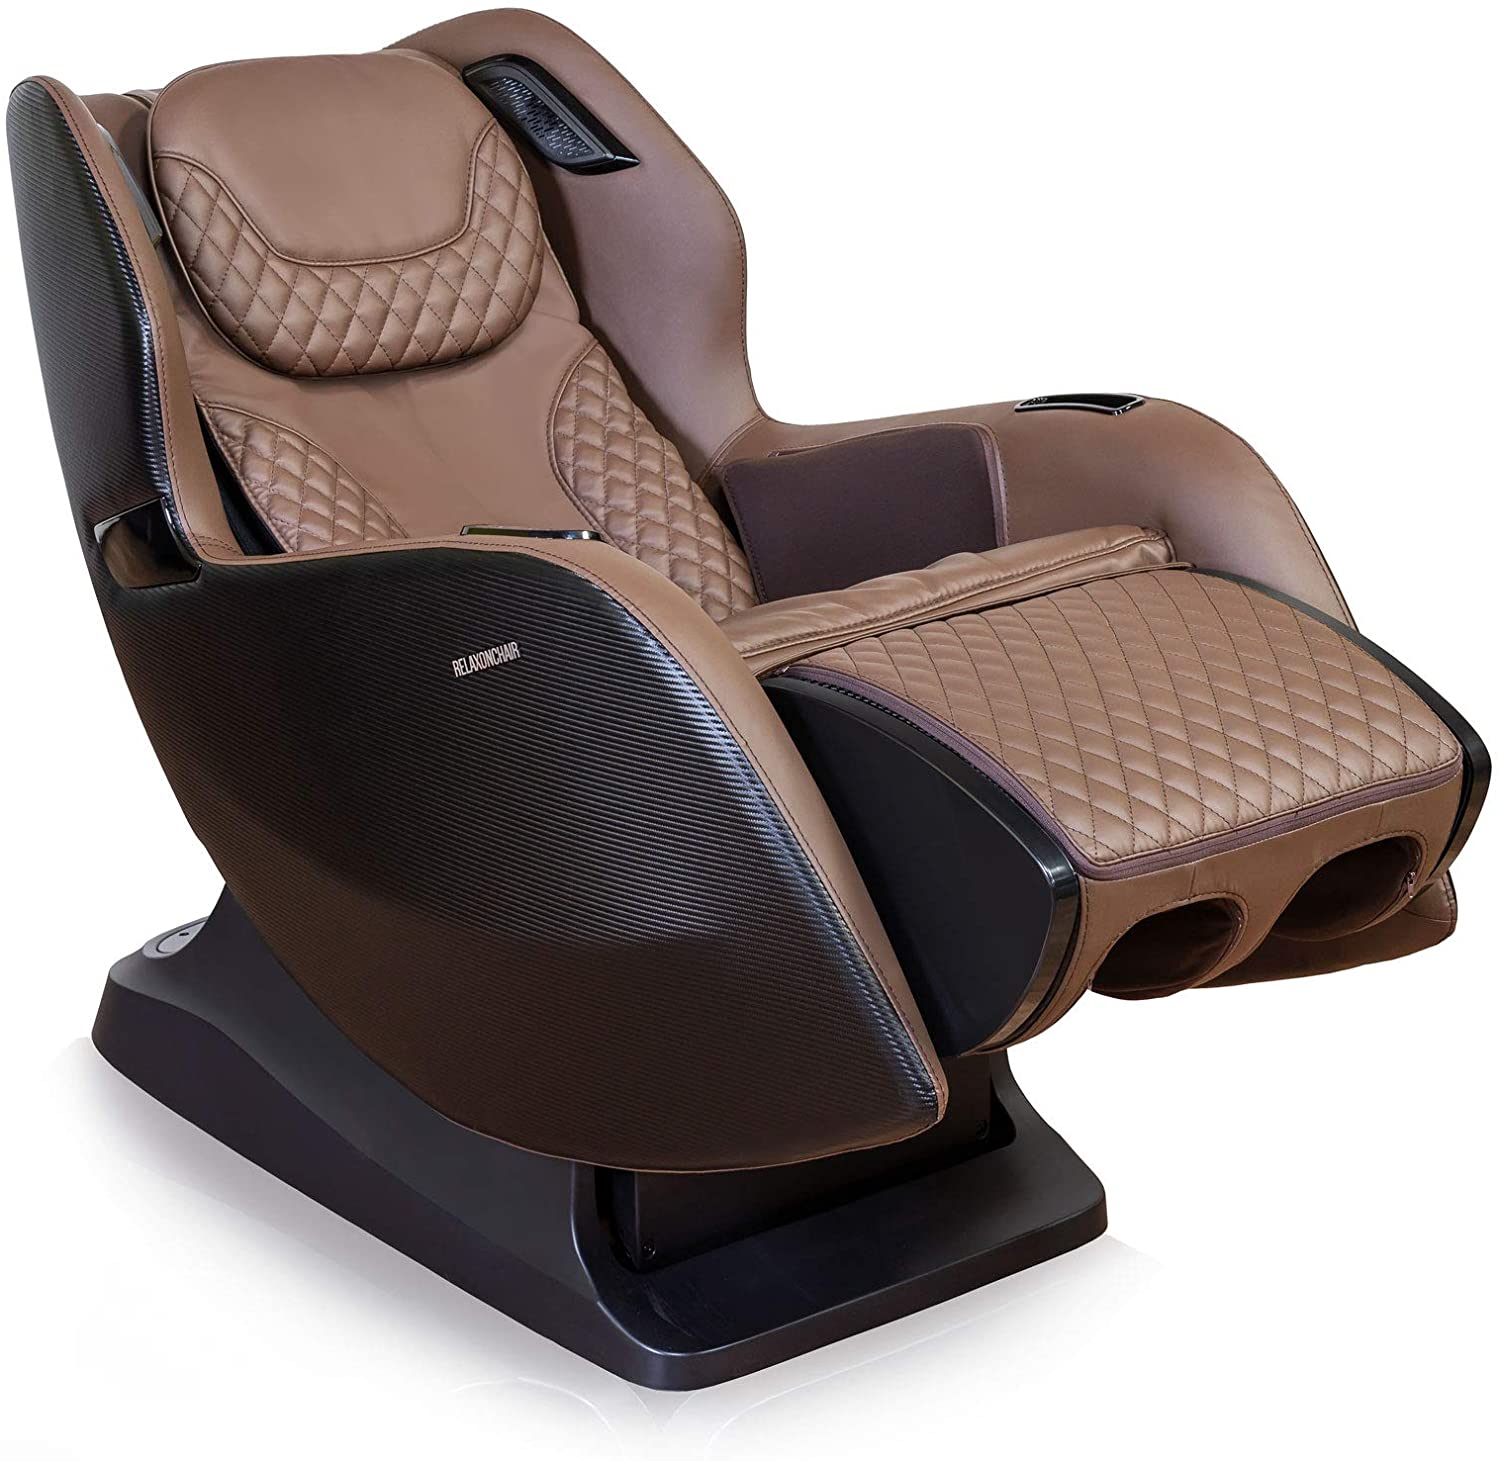 RELAXONCHAIR Full Body Zero Gravity Massage Recliner Chair